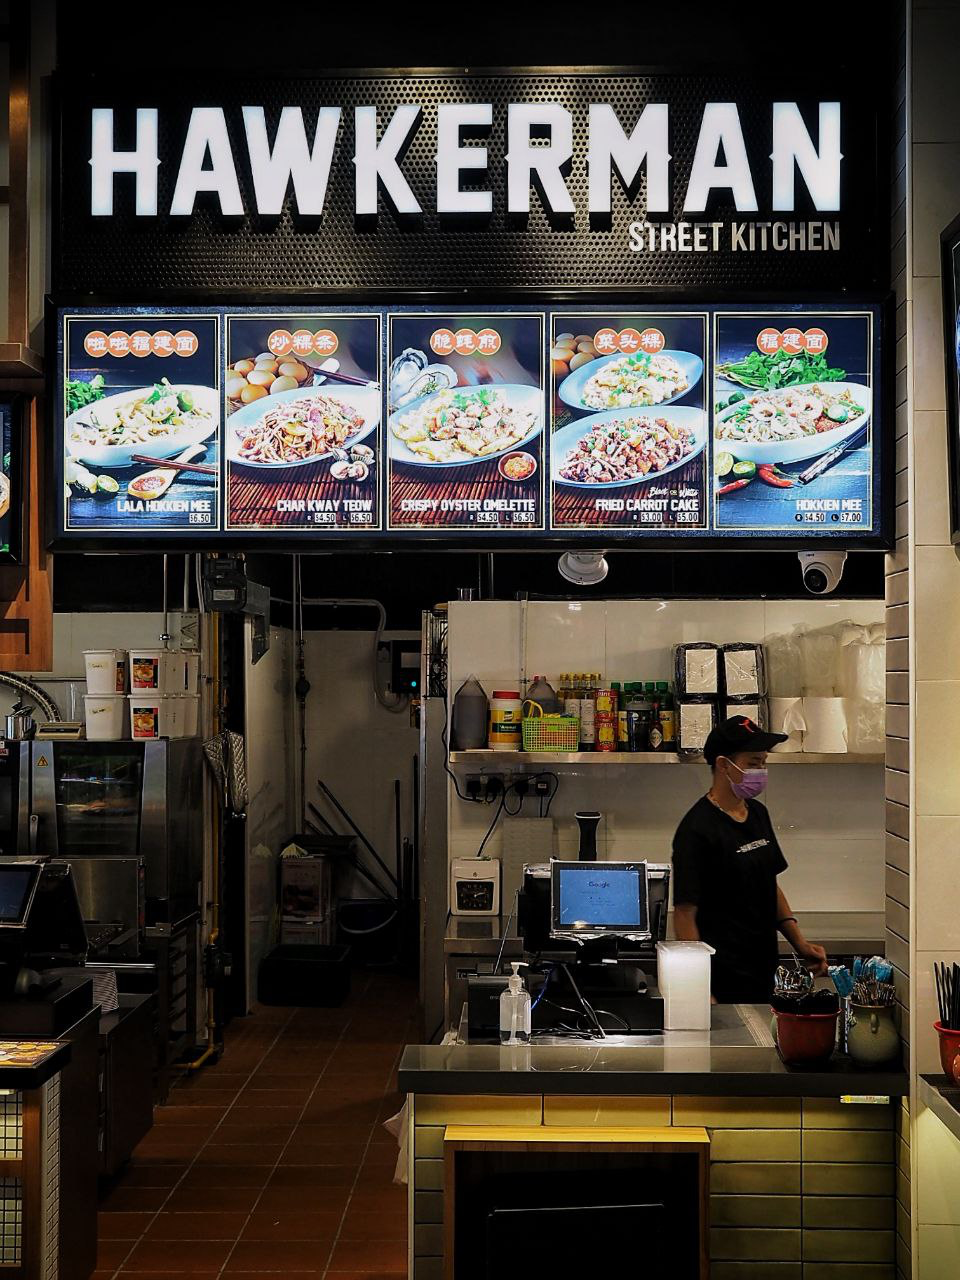 Hawkerman Street Kitchen @Haig Road